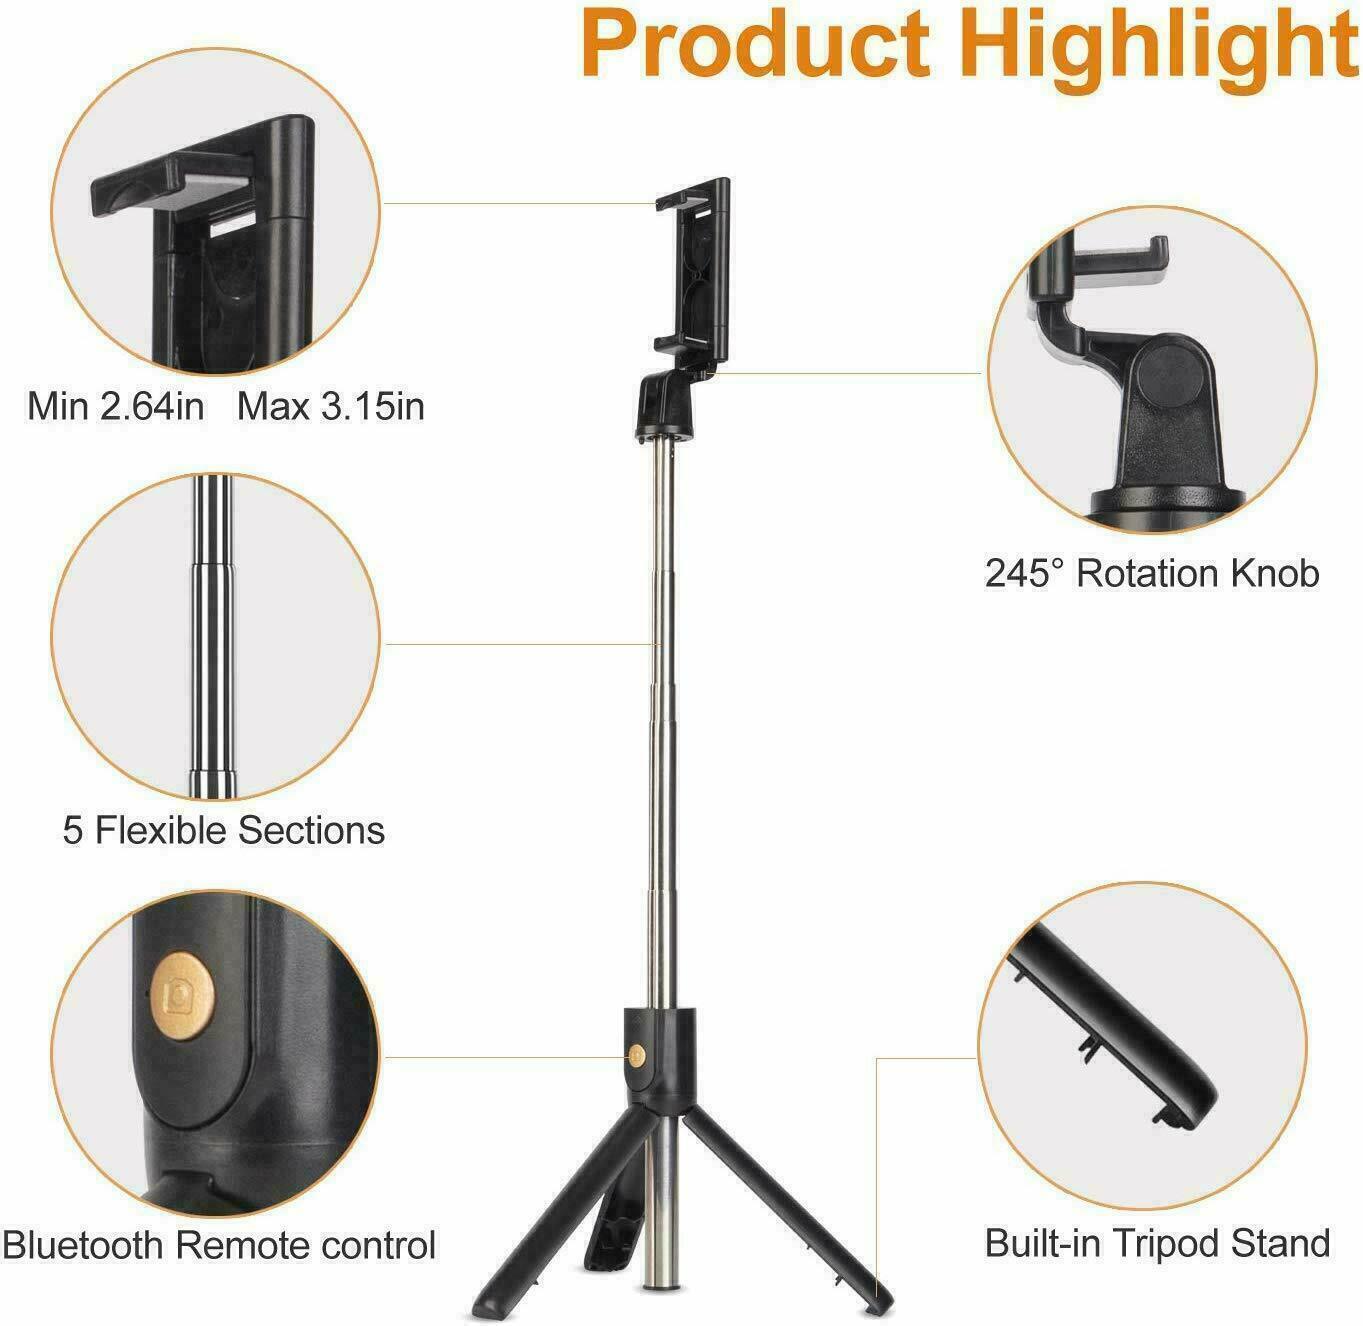 Bluetooth Selfie Tripod Telescopic Stick Remote Monopod Extendable Phone Stand